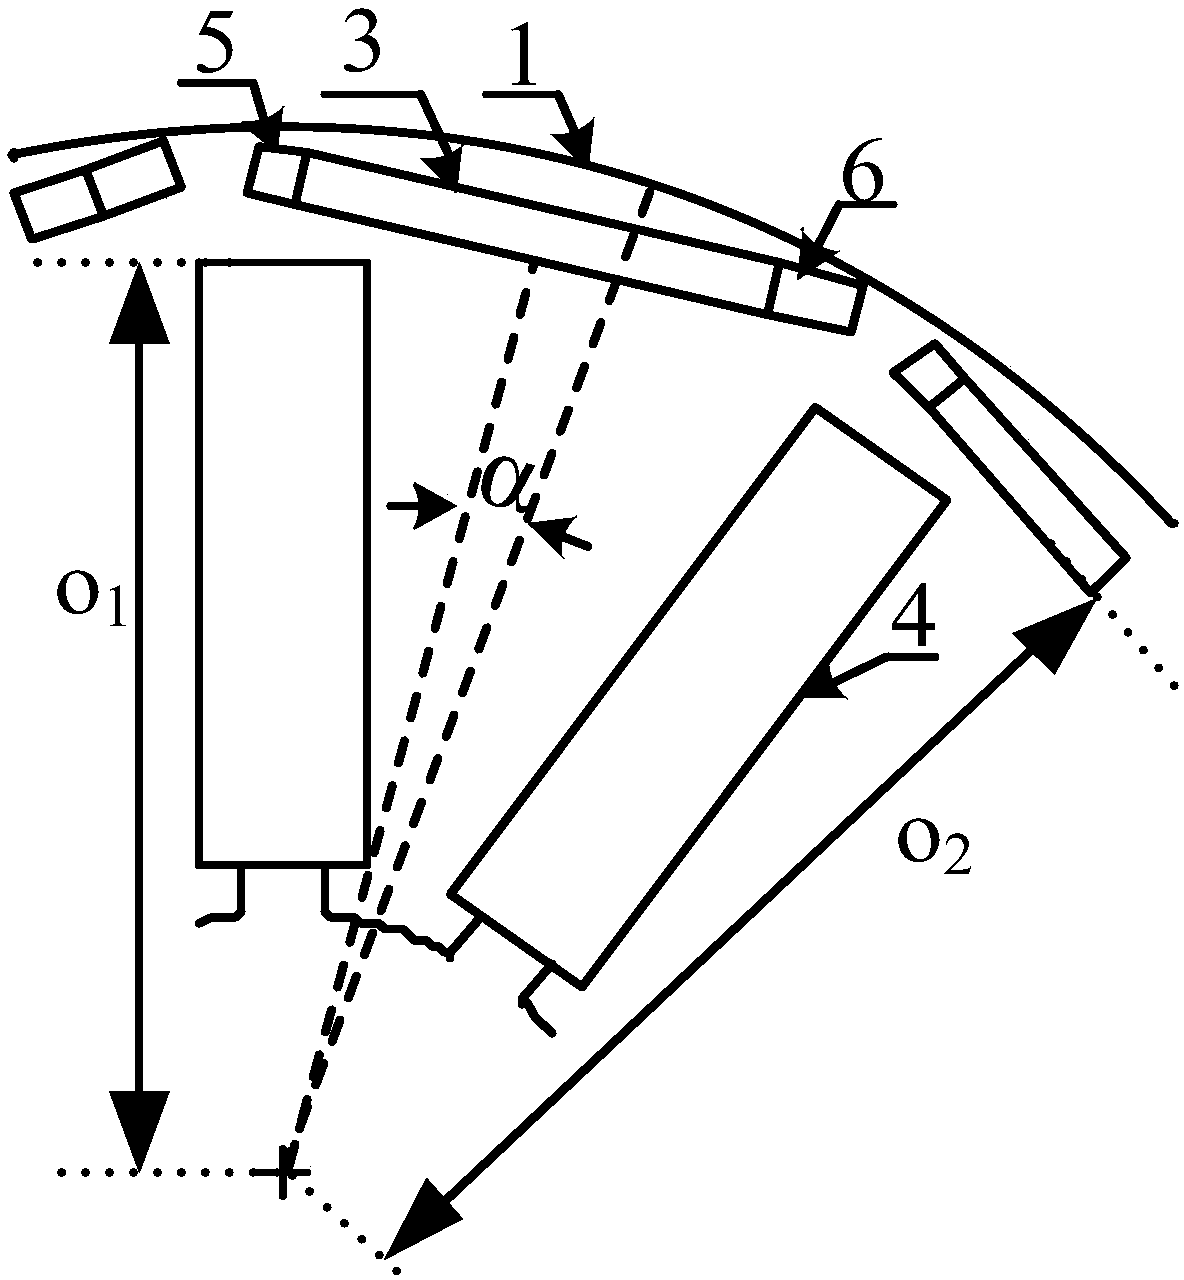 High-torque-density asymmetrical rotor structure